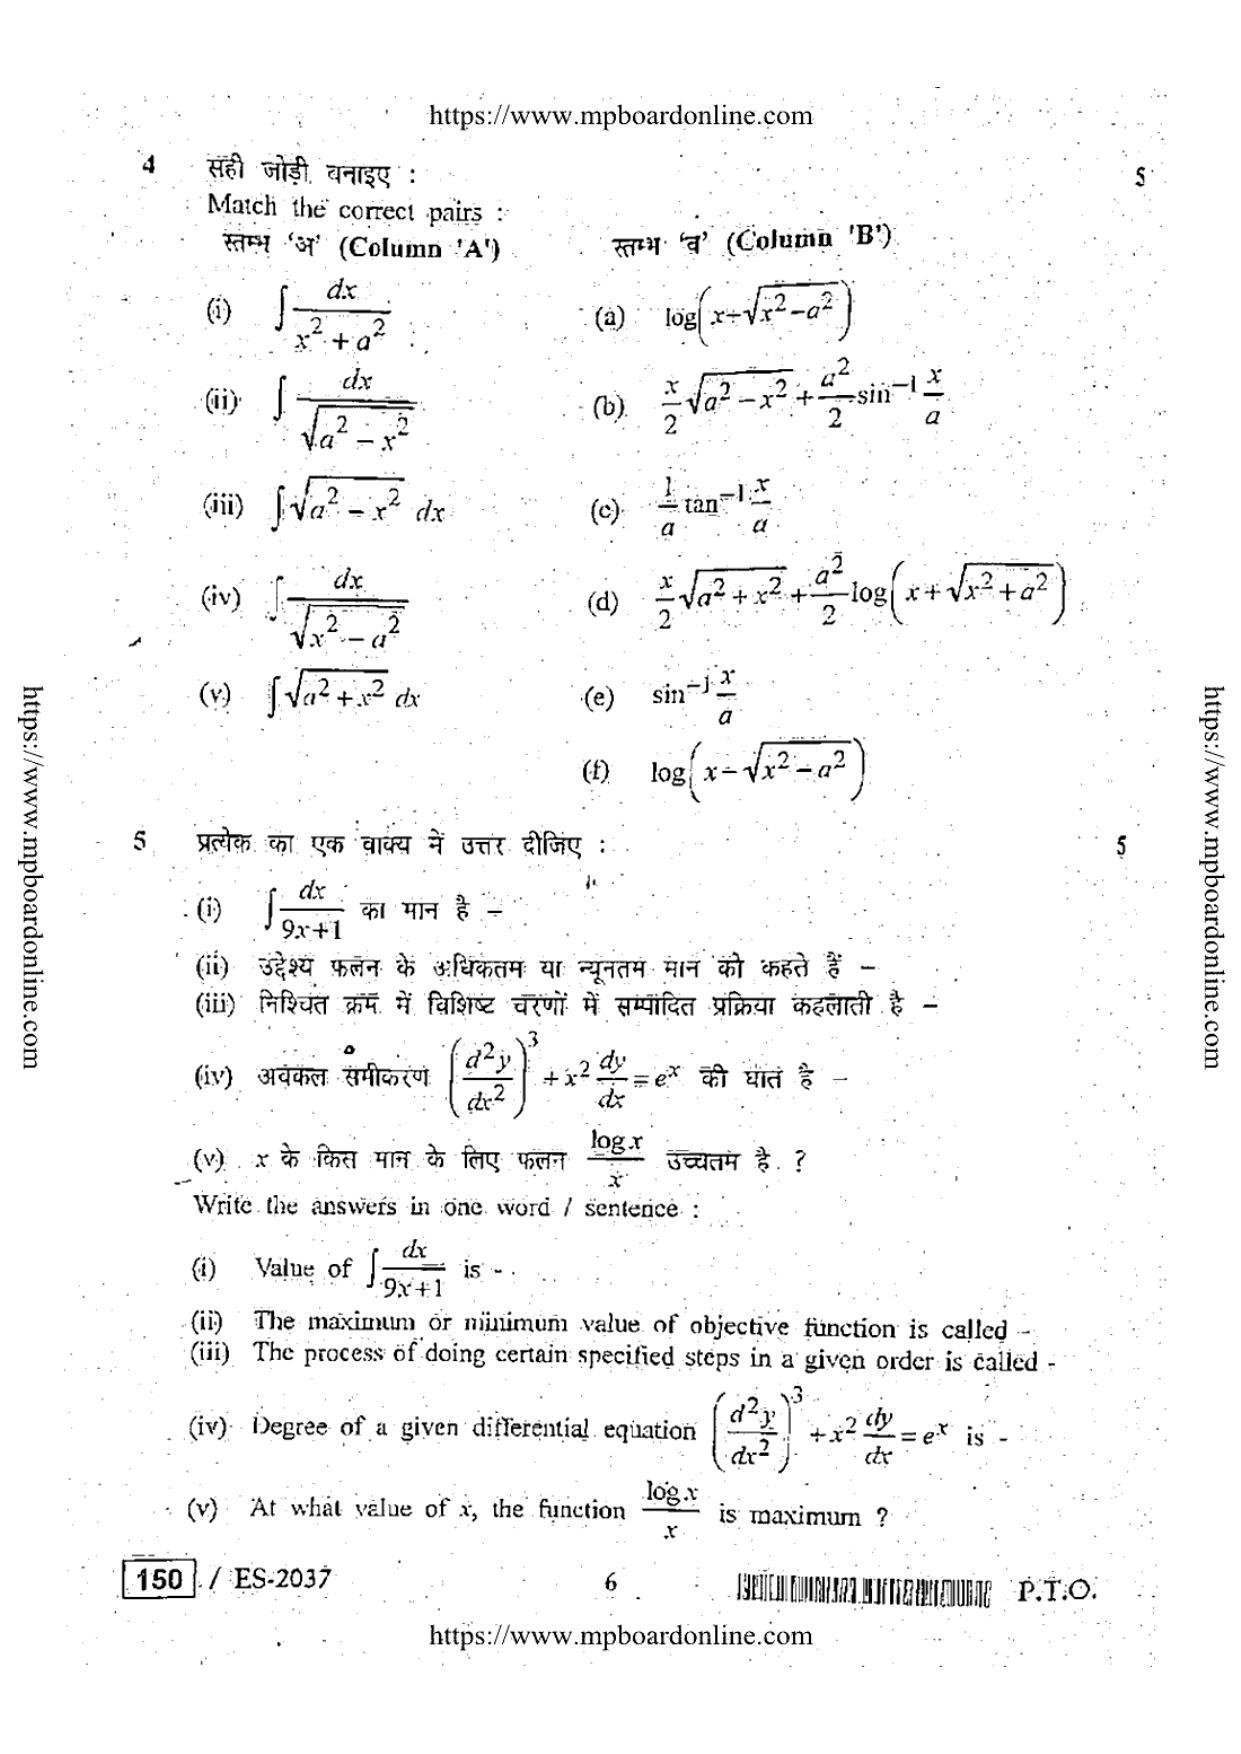 MP Board Class 12 Mathematica 2019 Question Paper - Page 5